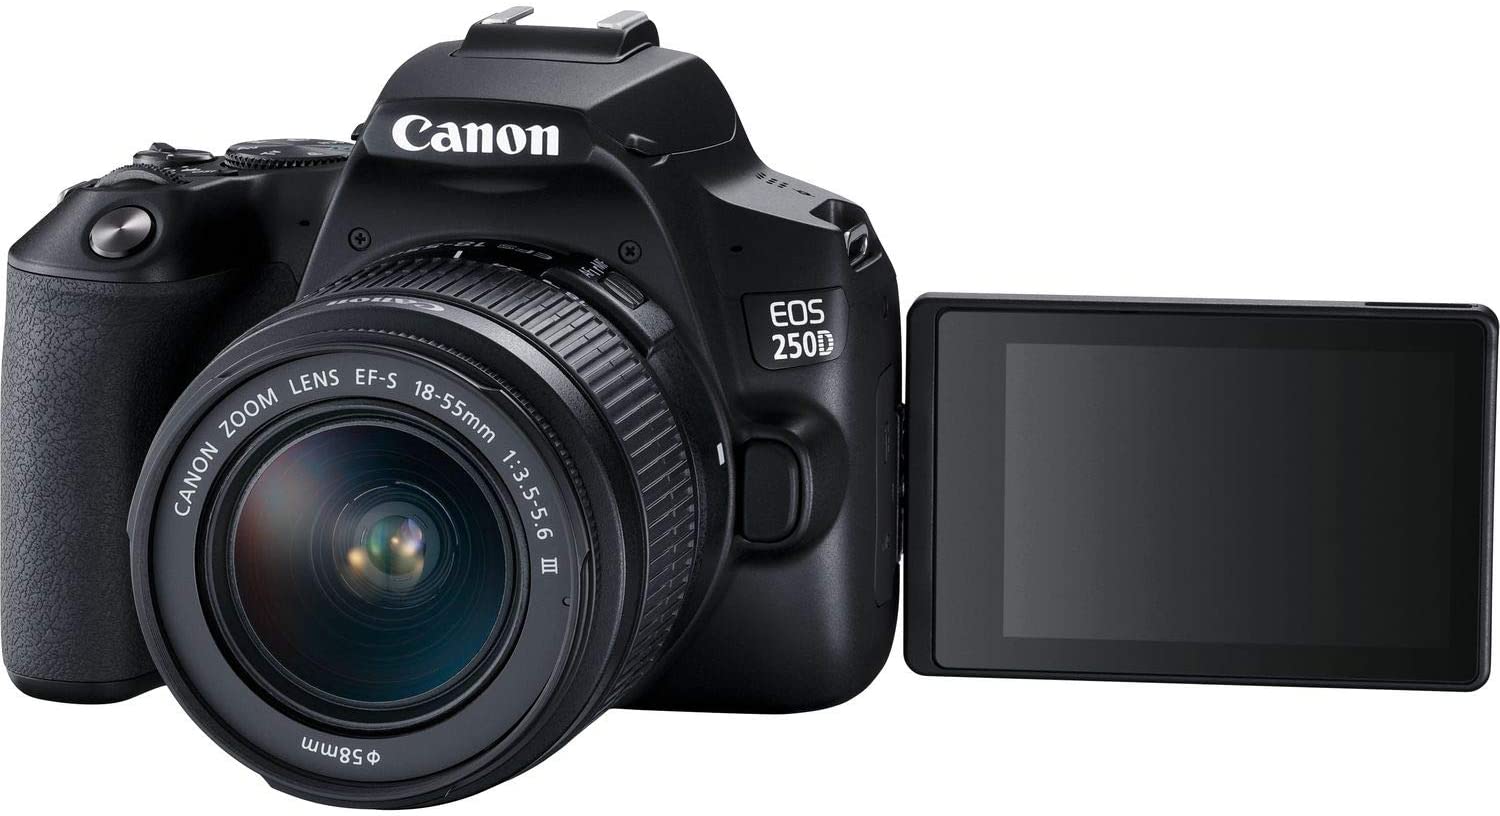 Canon EOS 250D / Rebel SL3 DSLR Camera with 18-55mm Lens (Black) + Creative Filter Set, EOS Camera Bag + Sandisk Ultra 64GB Card + 6AVE Electronics